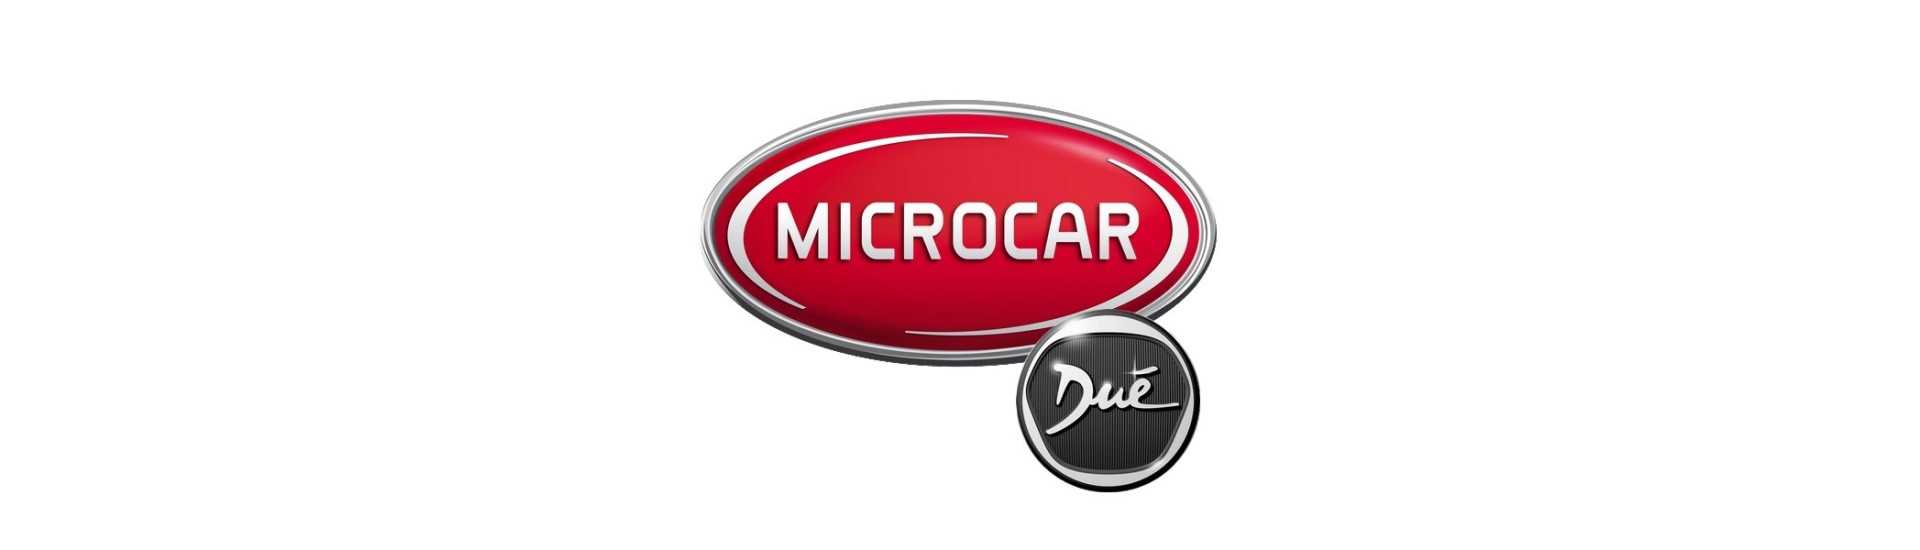 Radiator Durite till bästa bilpris utan tillstånd Microcar Dué